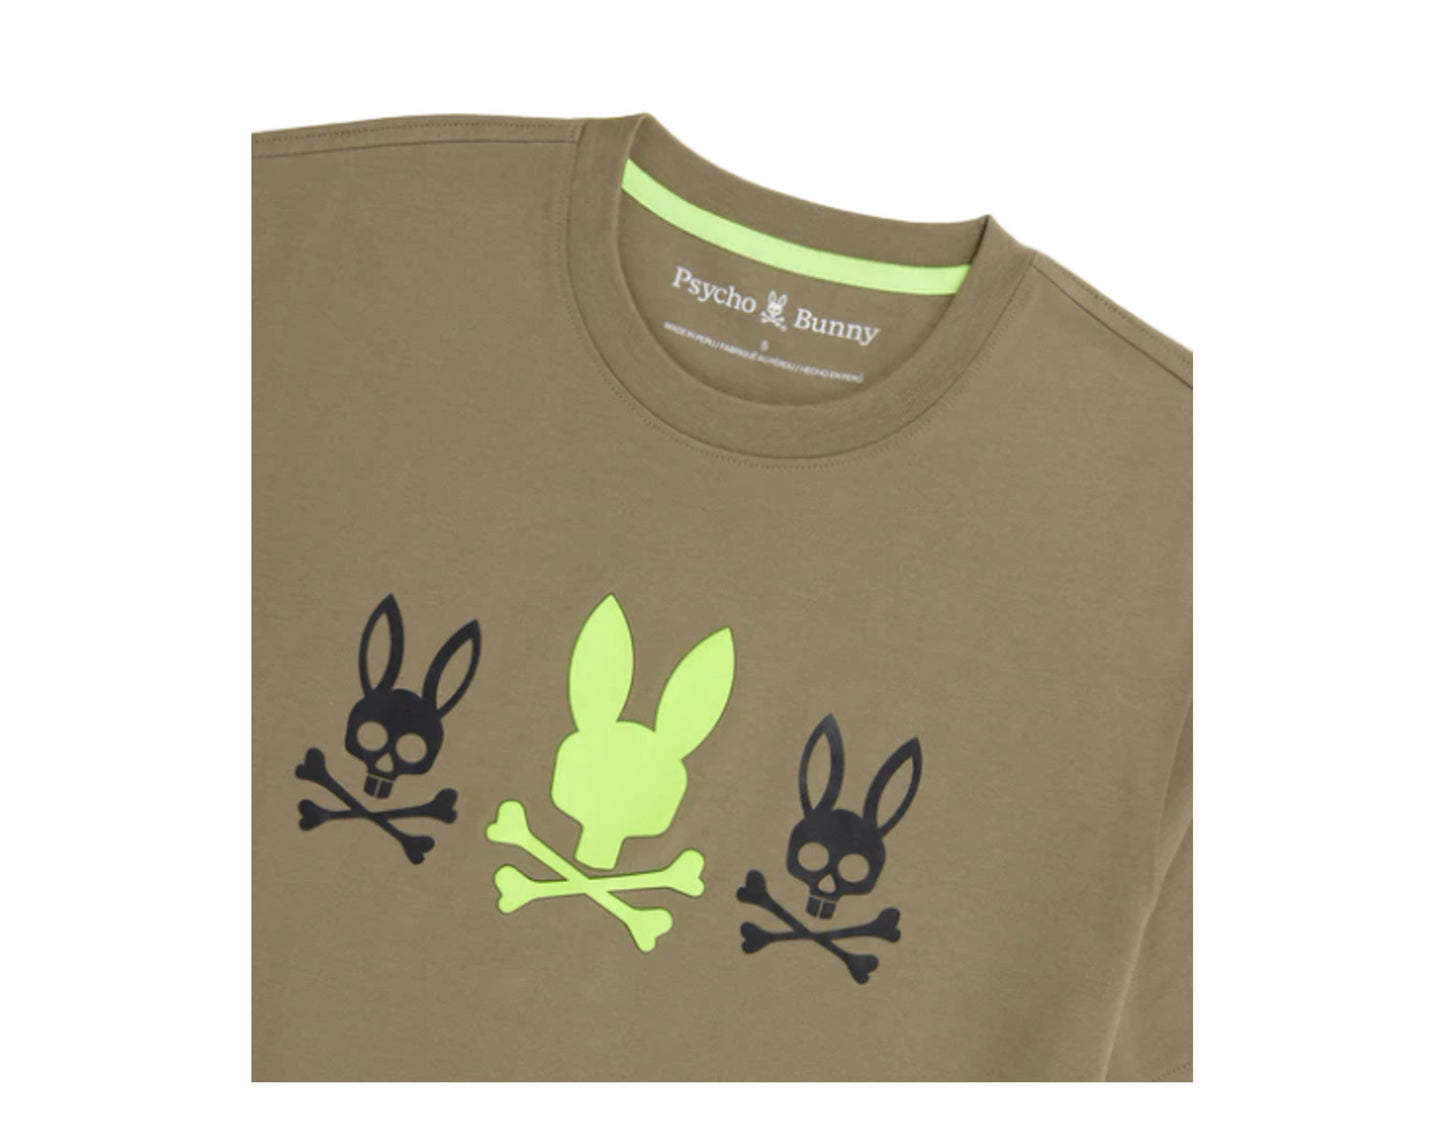 Psycho Bunny Lambert Graphic Men's Tee Shirt